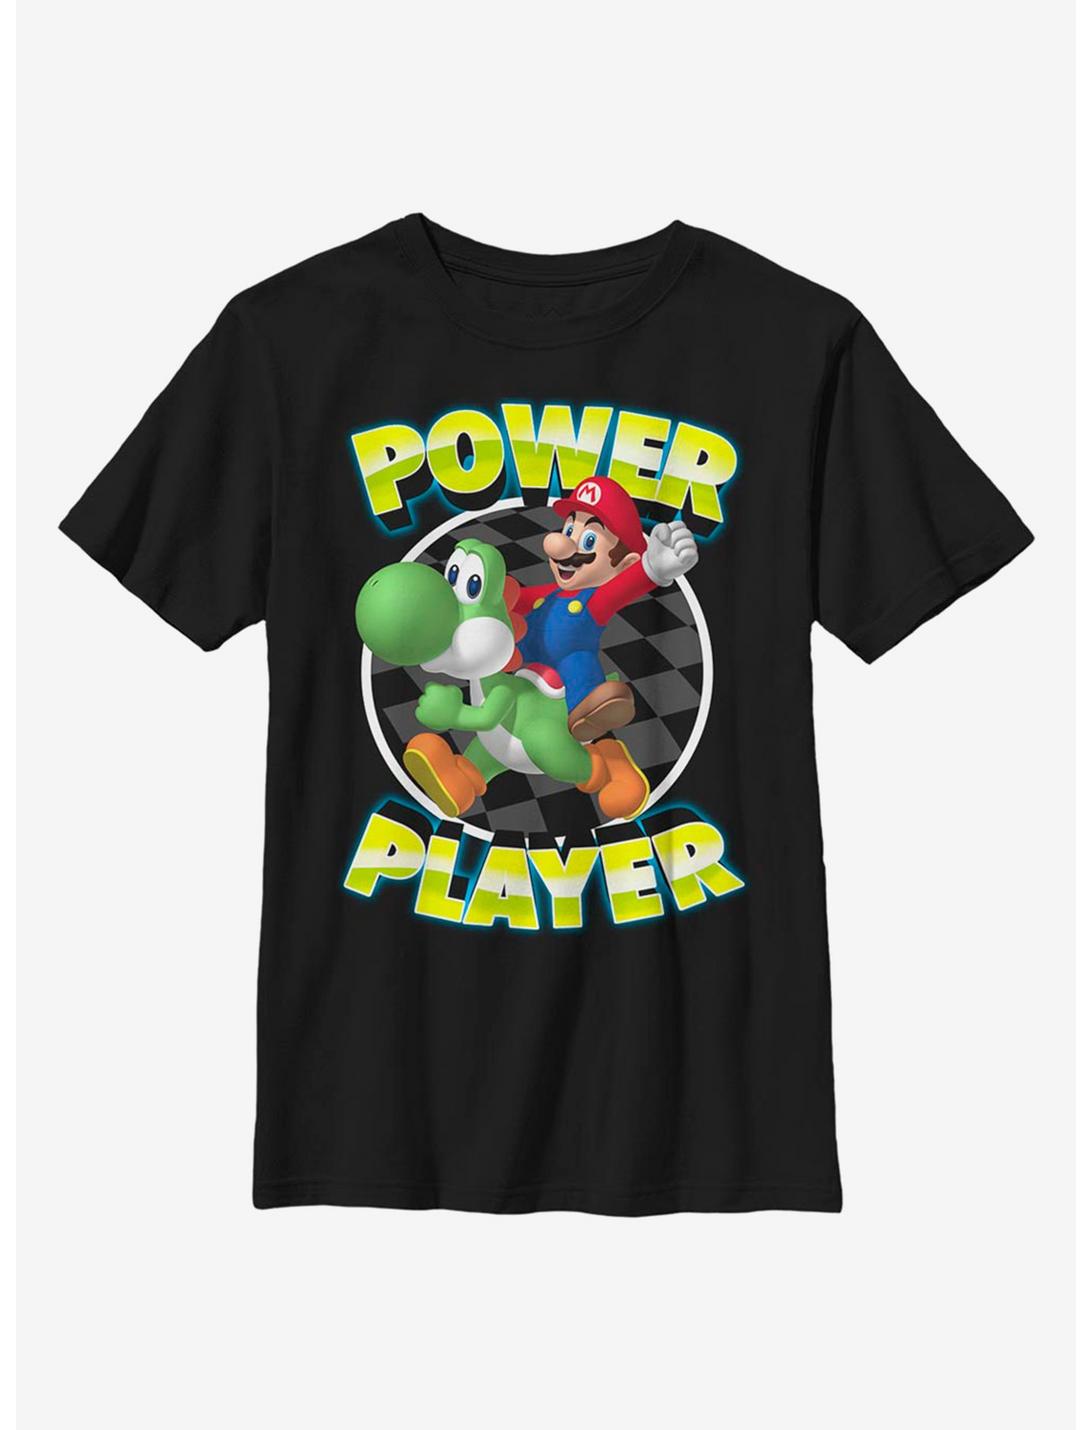 Nintendo Super Mario Ready Player Youth T-Shirt, BLACK, hi-res